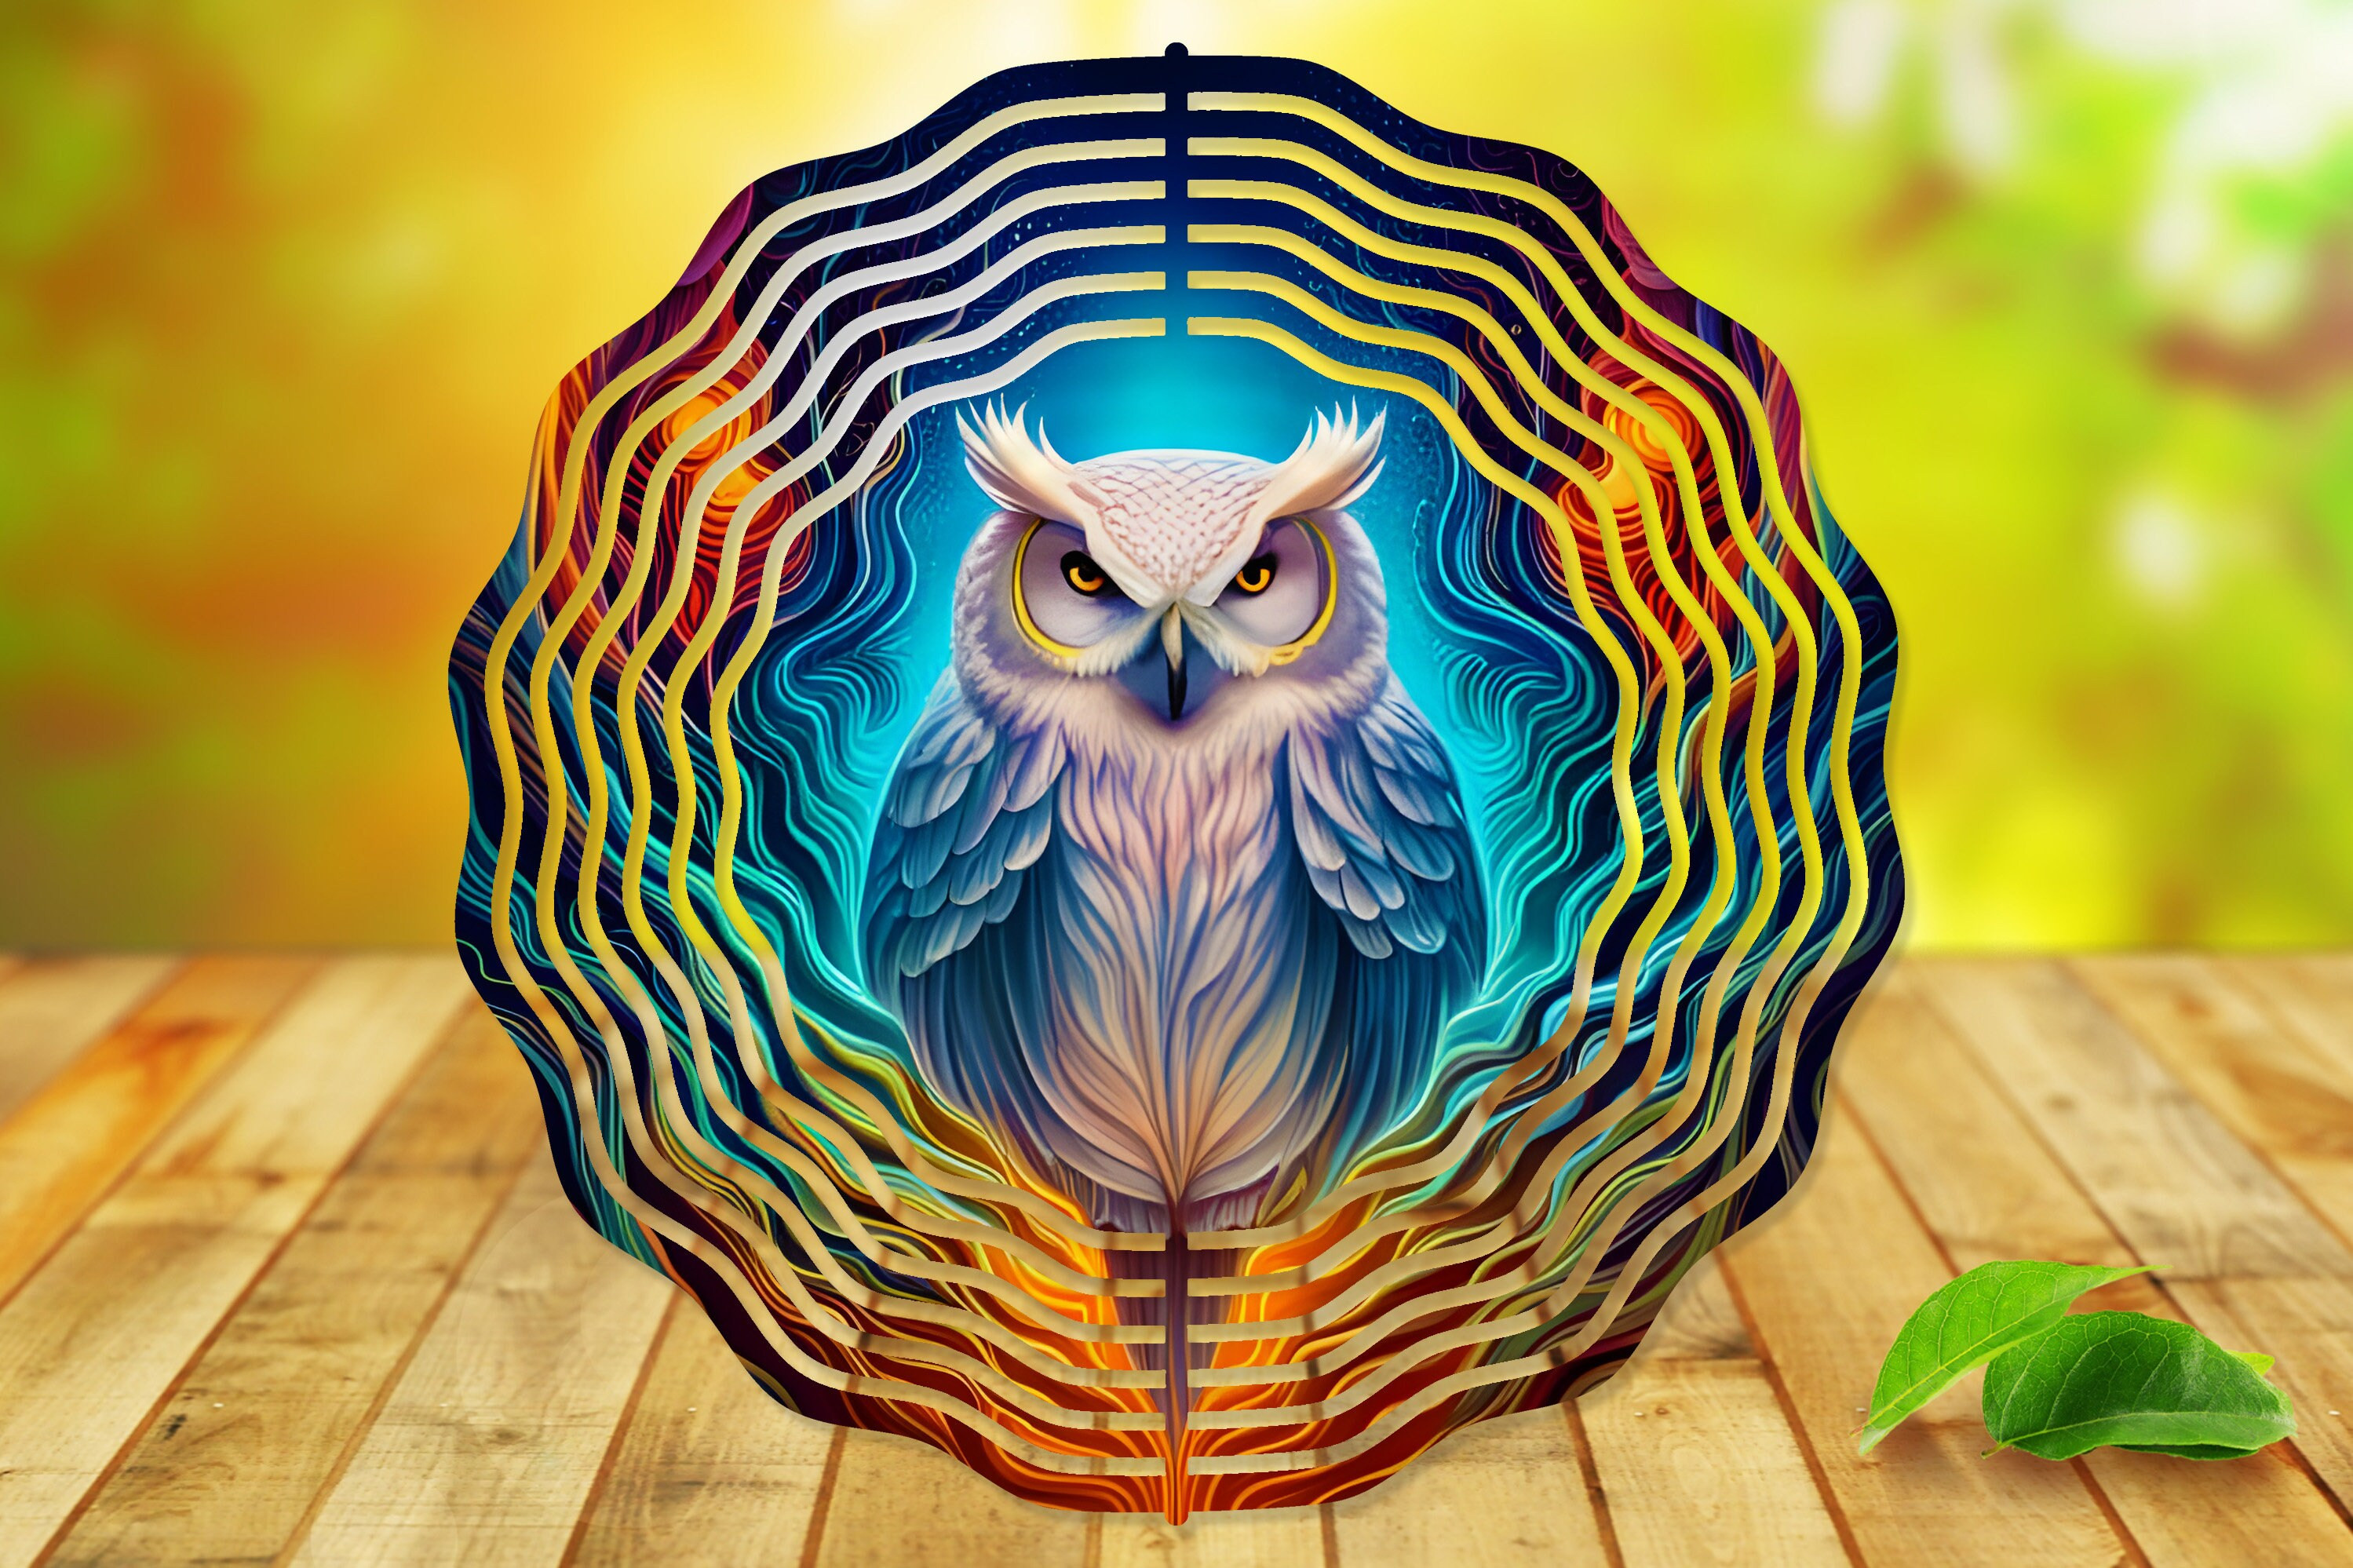 3D Celestial Owl Wind Spinner For Yard And Garden, Outdoor Garden Yard Decoration, Garden Decor, Chime Art Gift